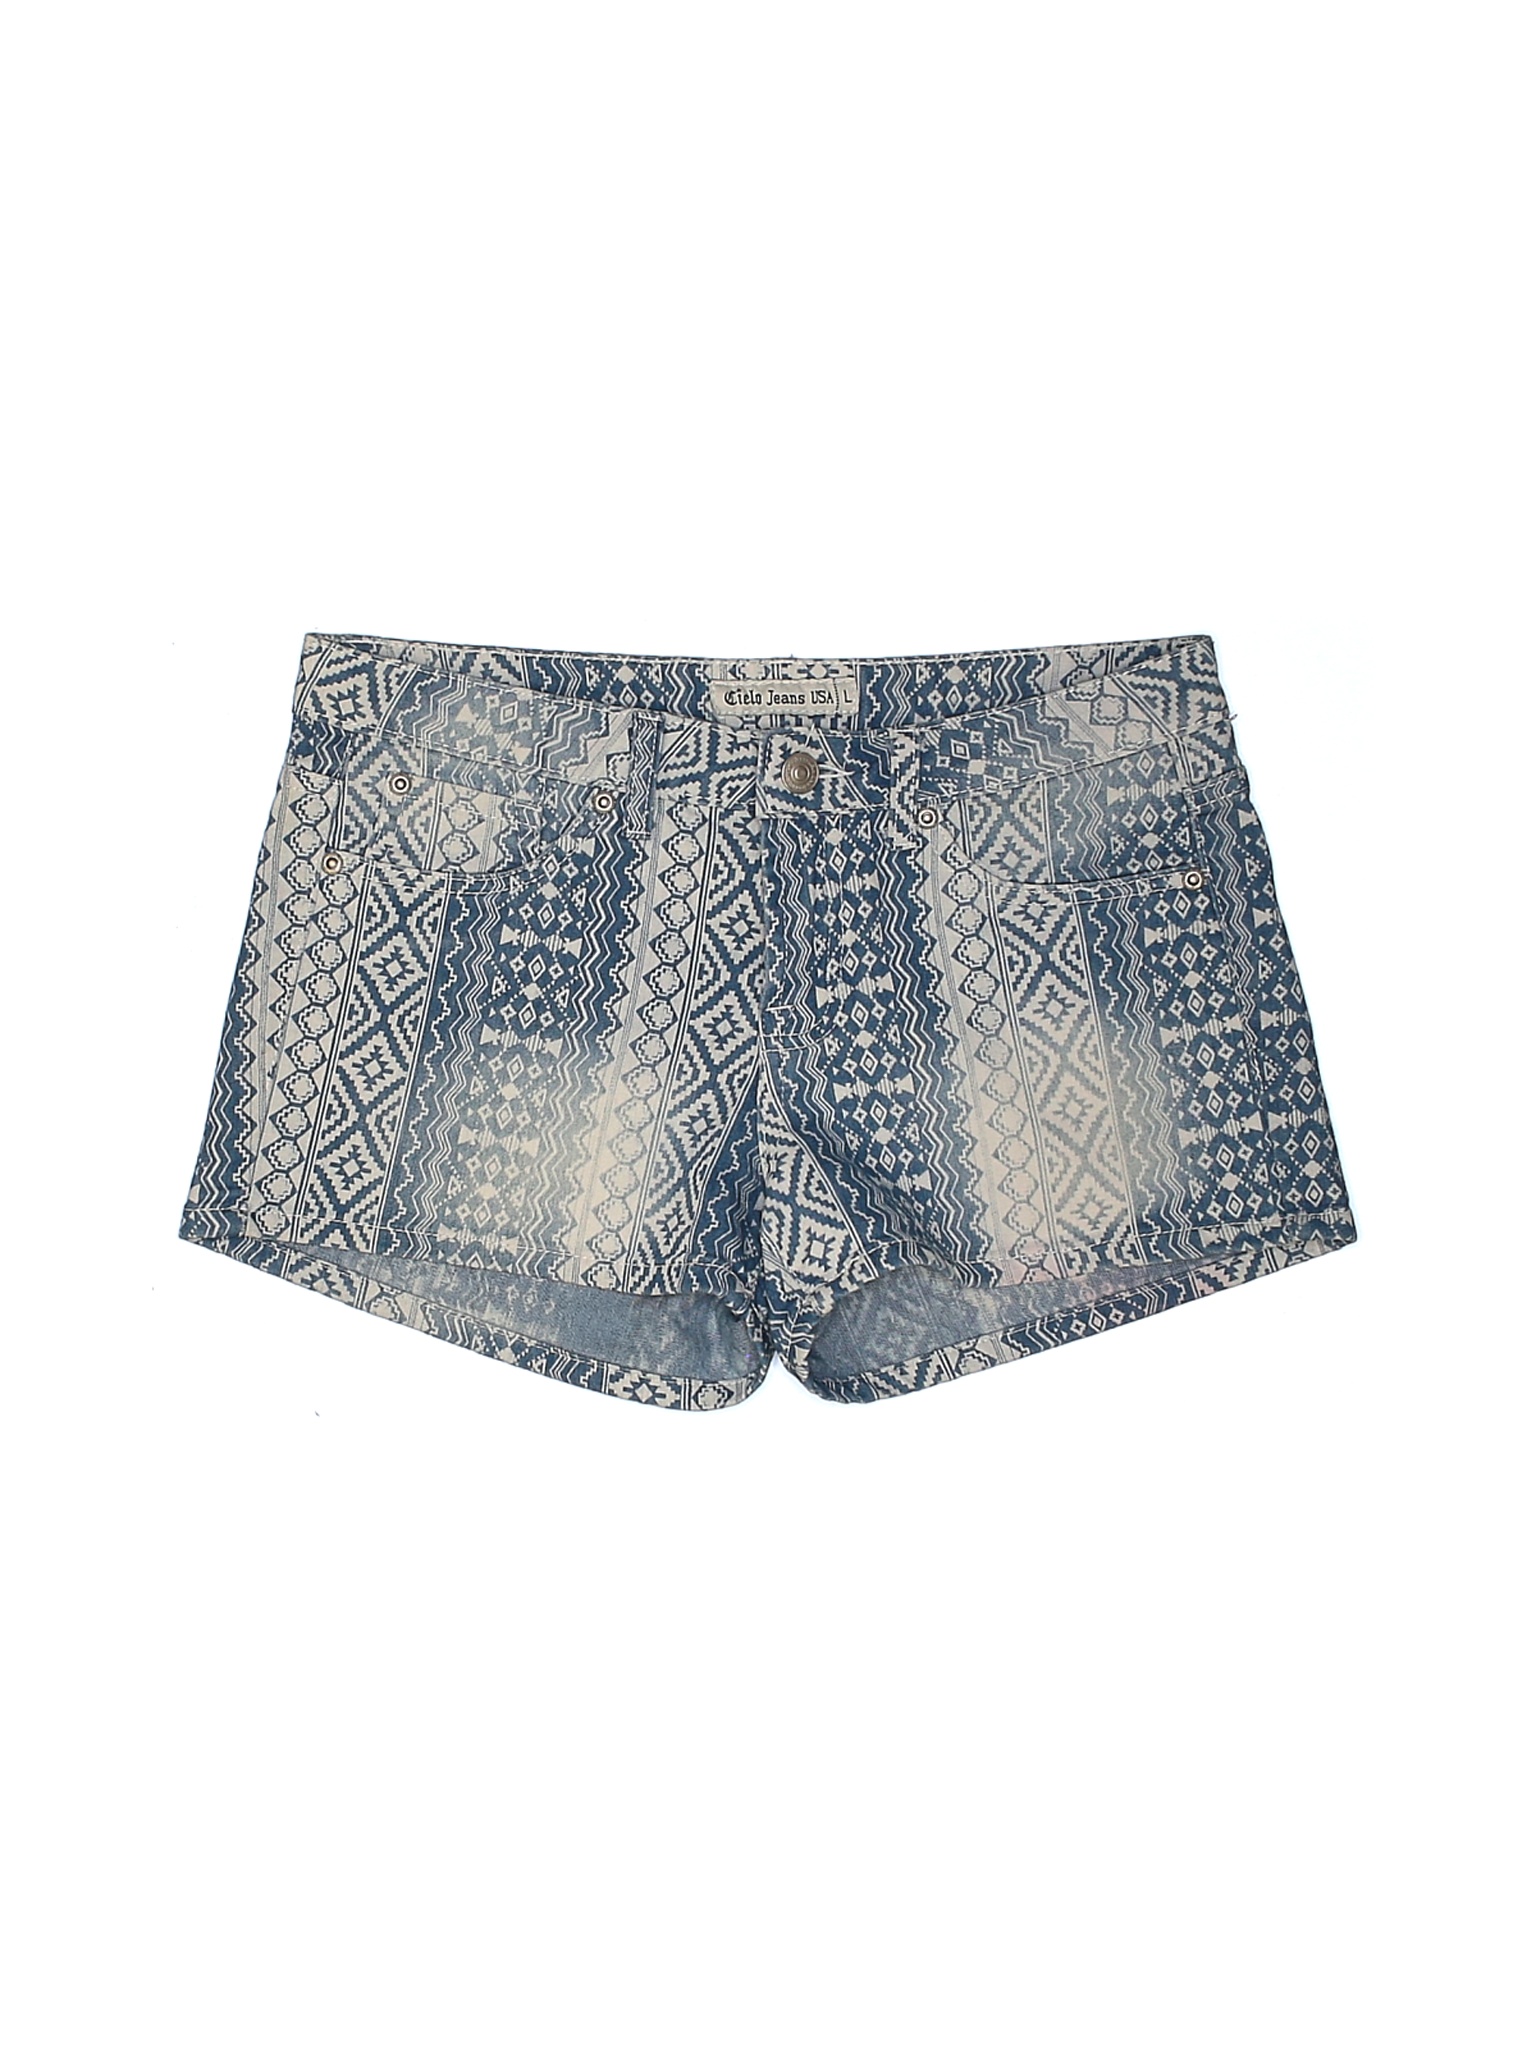 Cielo Women Blue Denim Shorts L | eBay